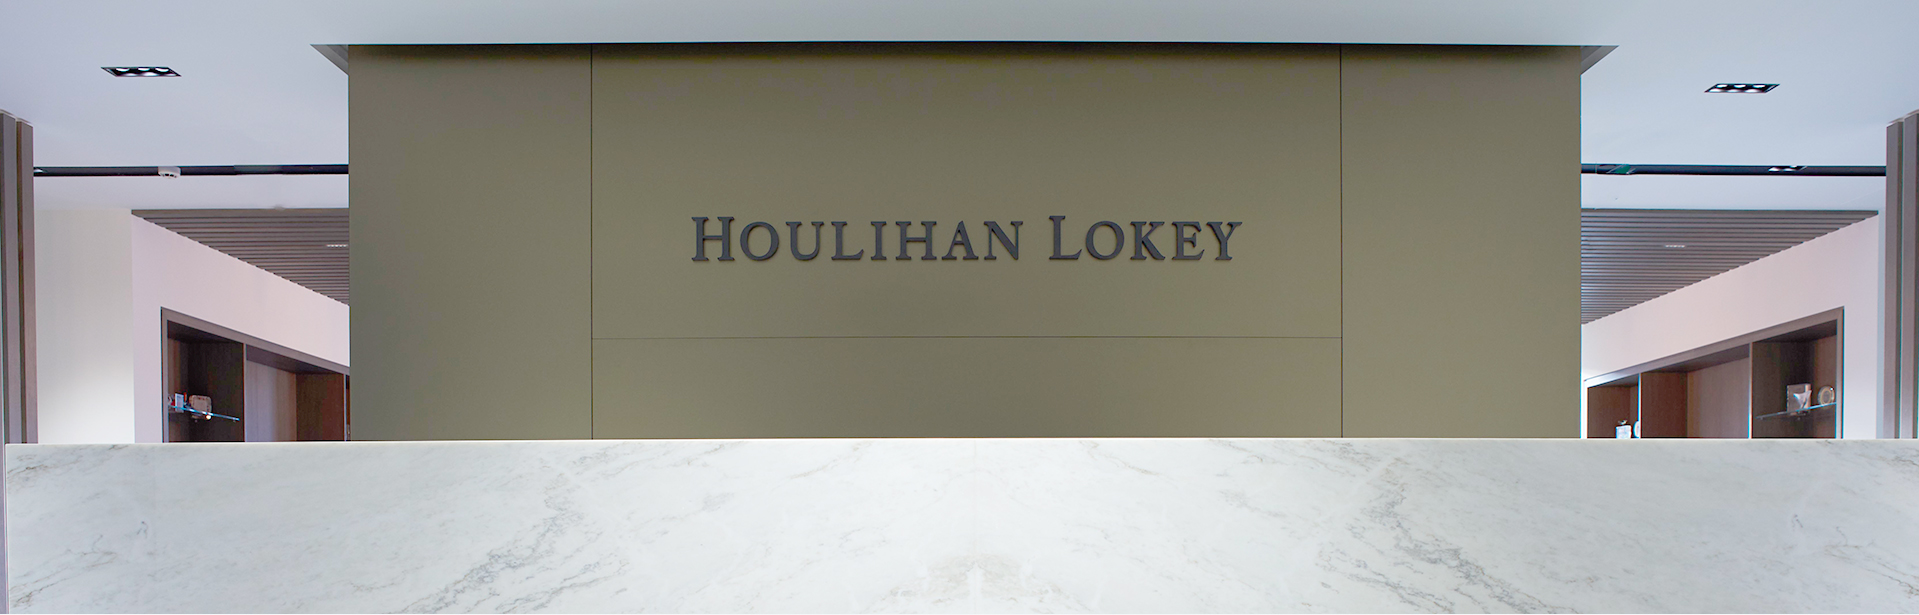 houlihan-lokey-case-study solution banner